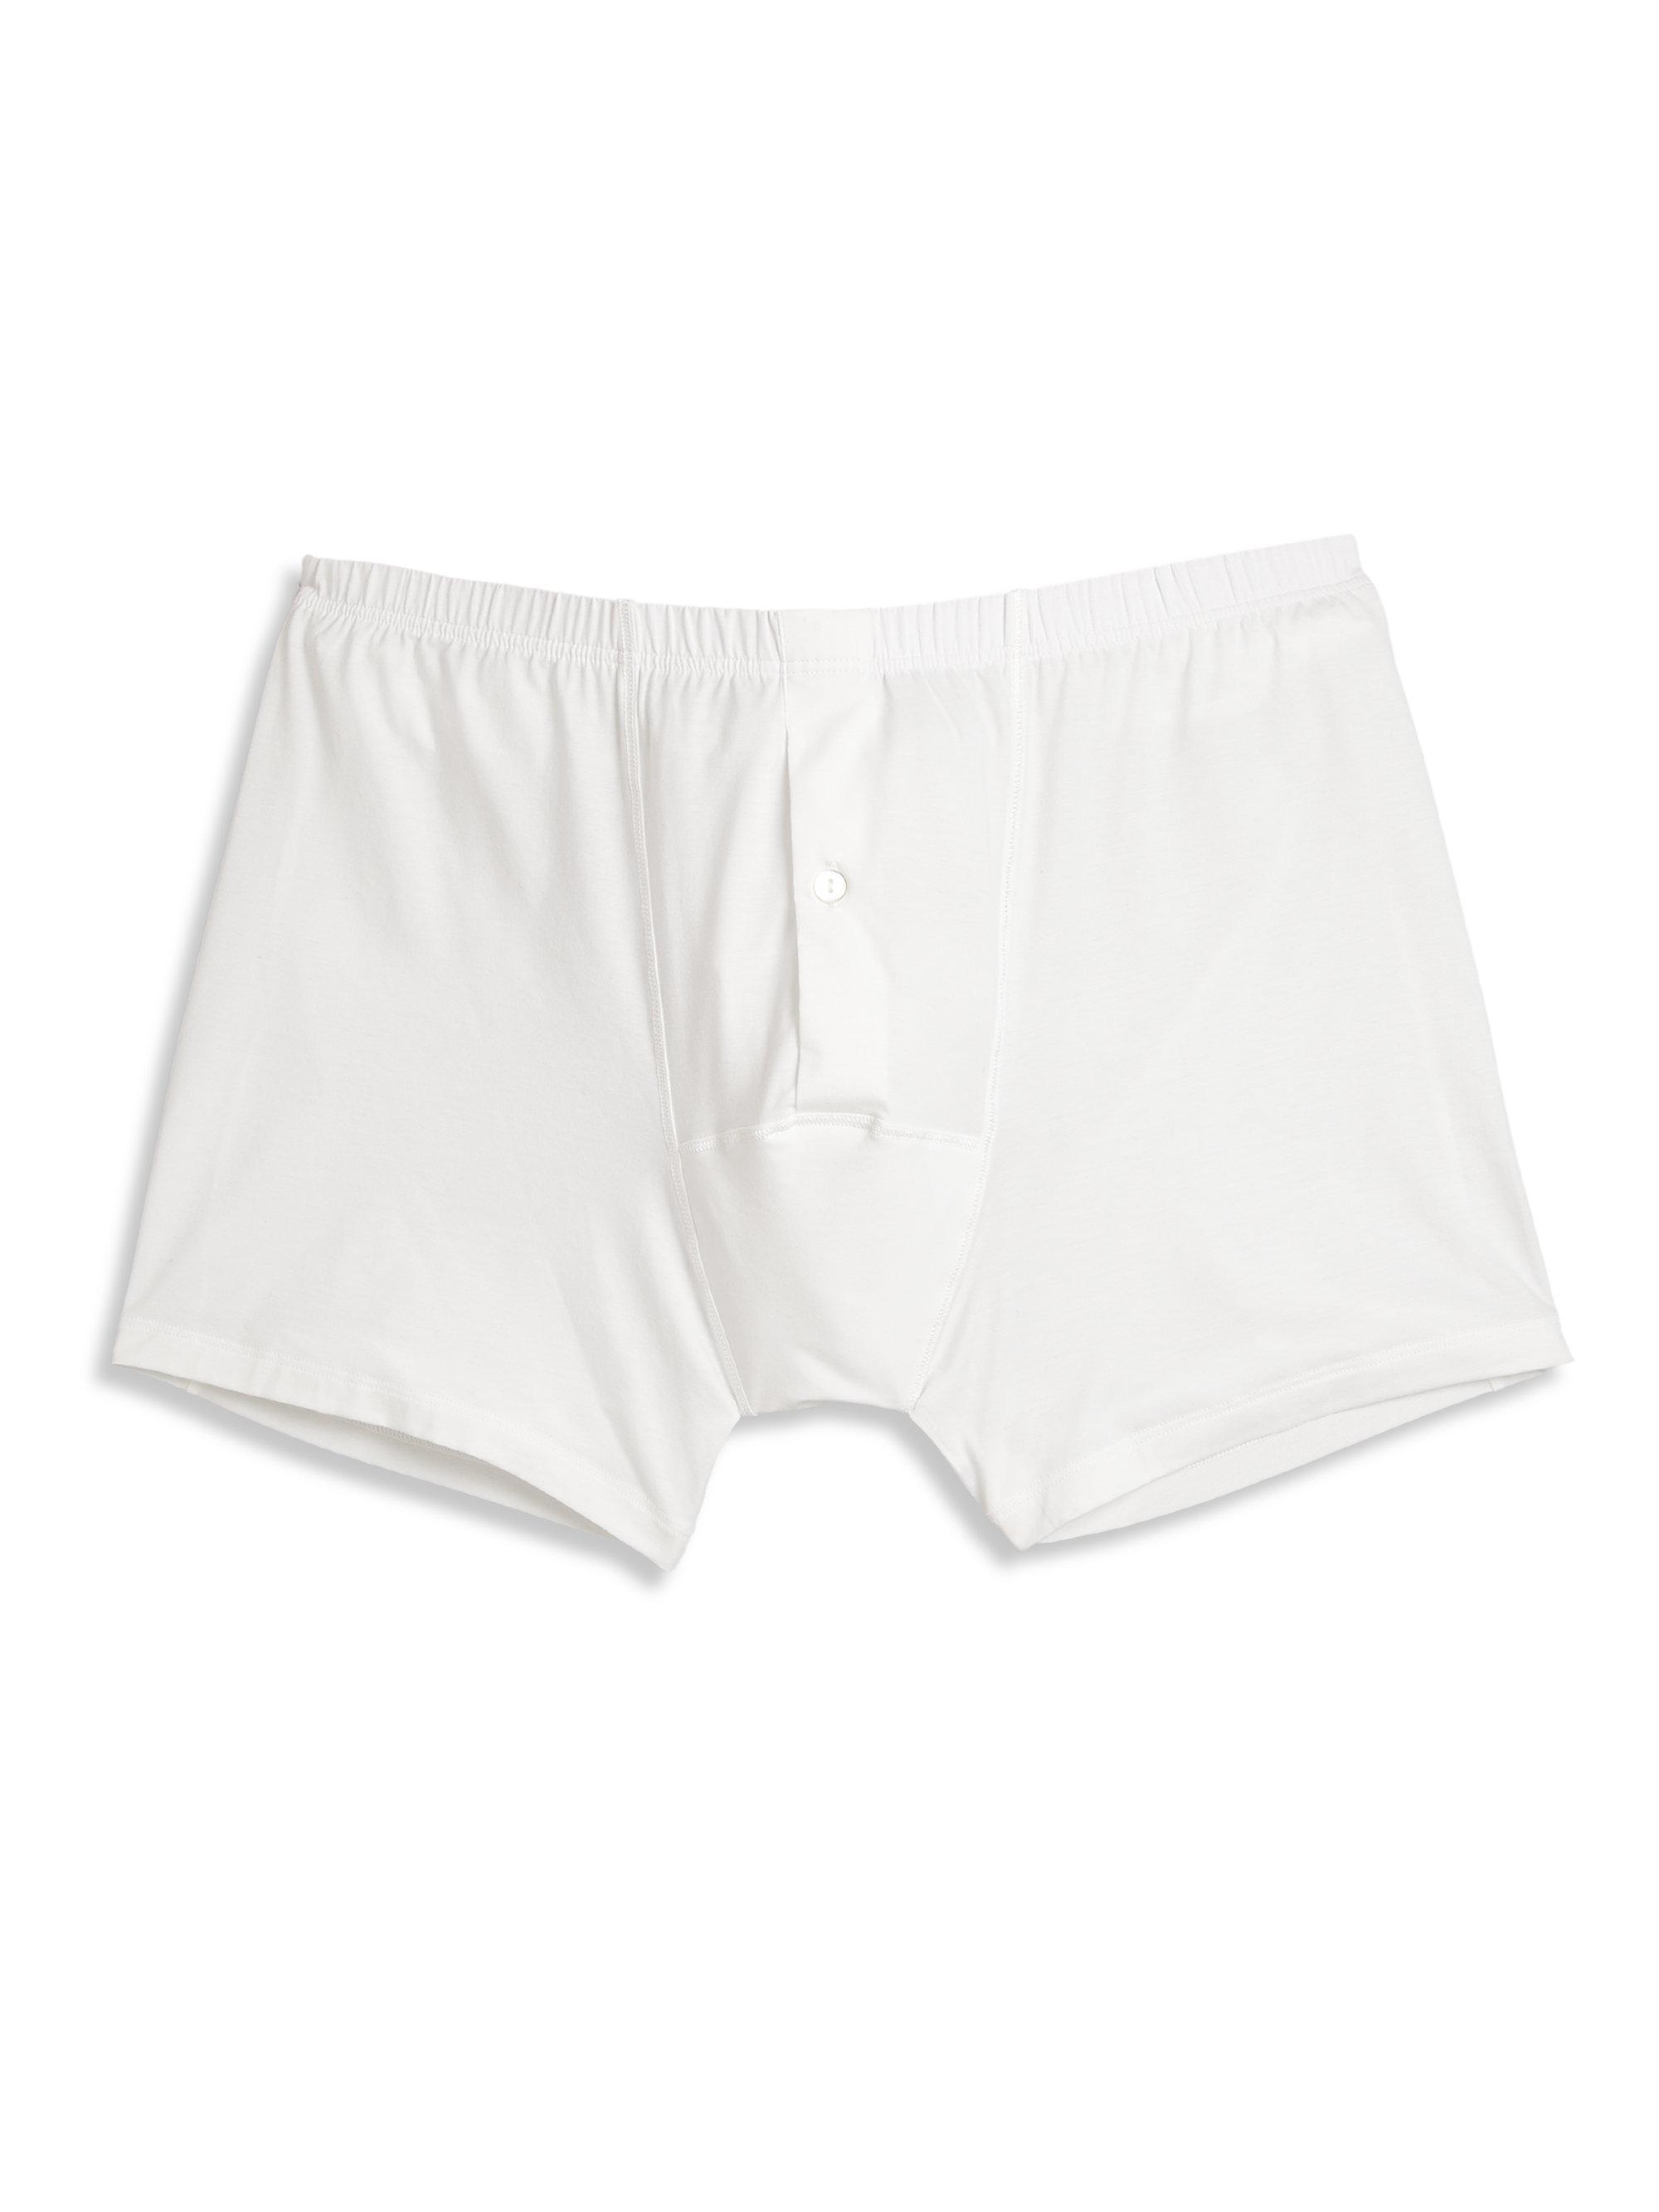 Hanro Cotton Sensation Stretch Boxer Briefs in White for Men - Lyst